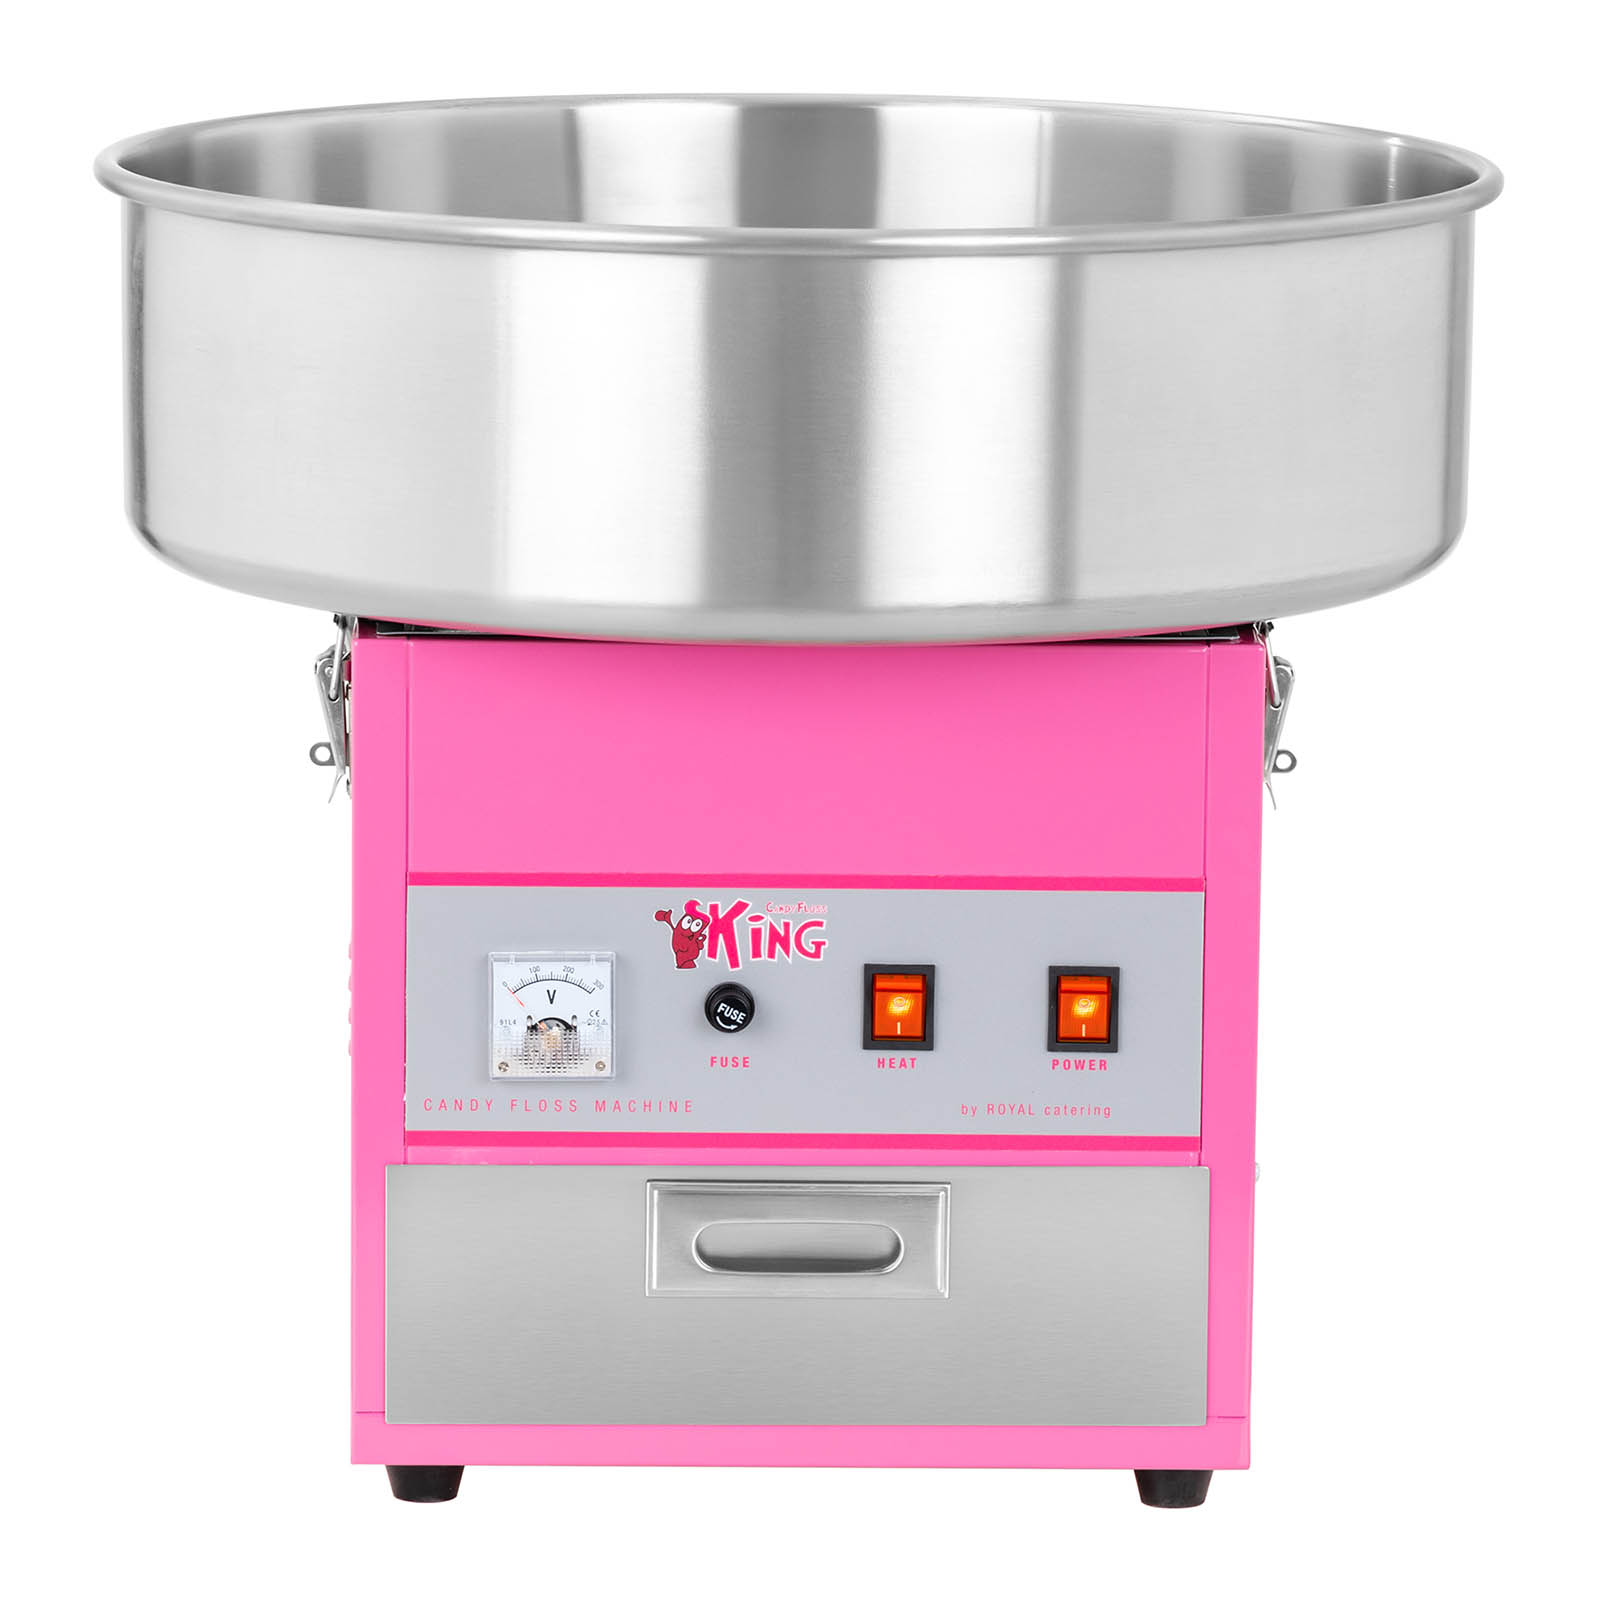 Candy Floss Machine Set with LED Cotton Candy Sticks - 52 cm - 1,200 W - Sneeze guard - 50 pcs.